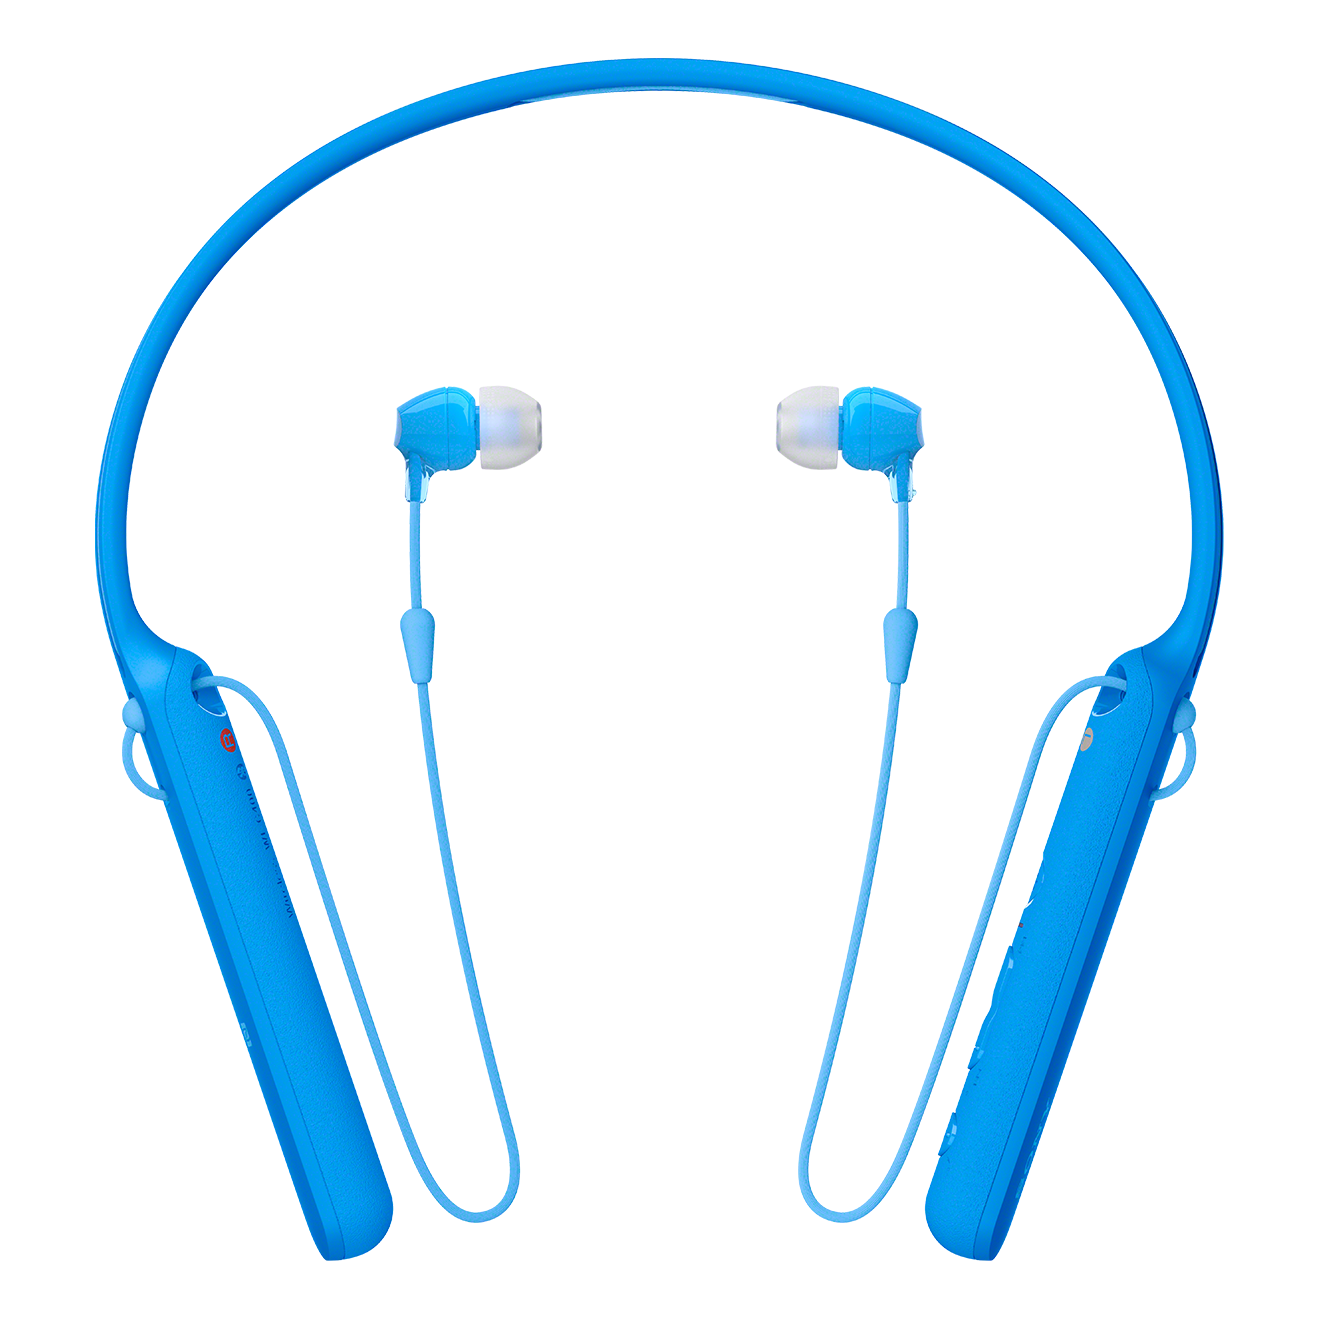 Neckband WI-C Blau Bluetooth Kopfhörer 400, SONY